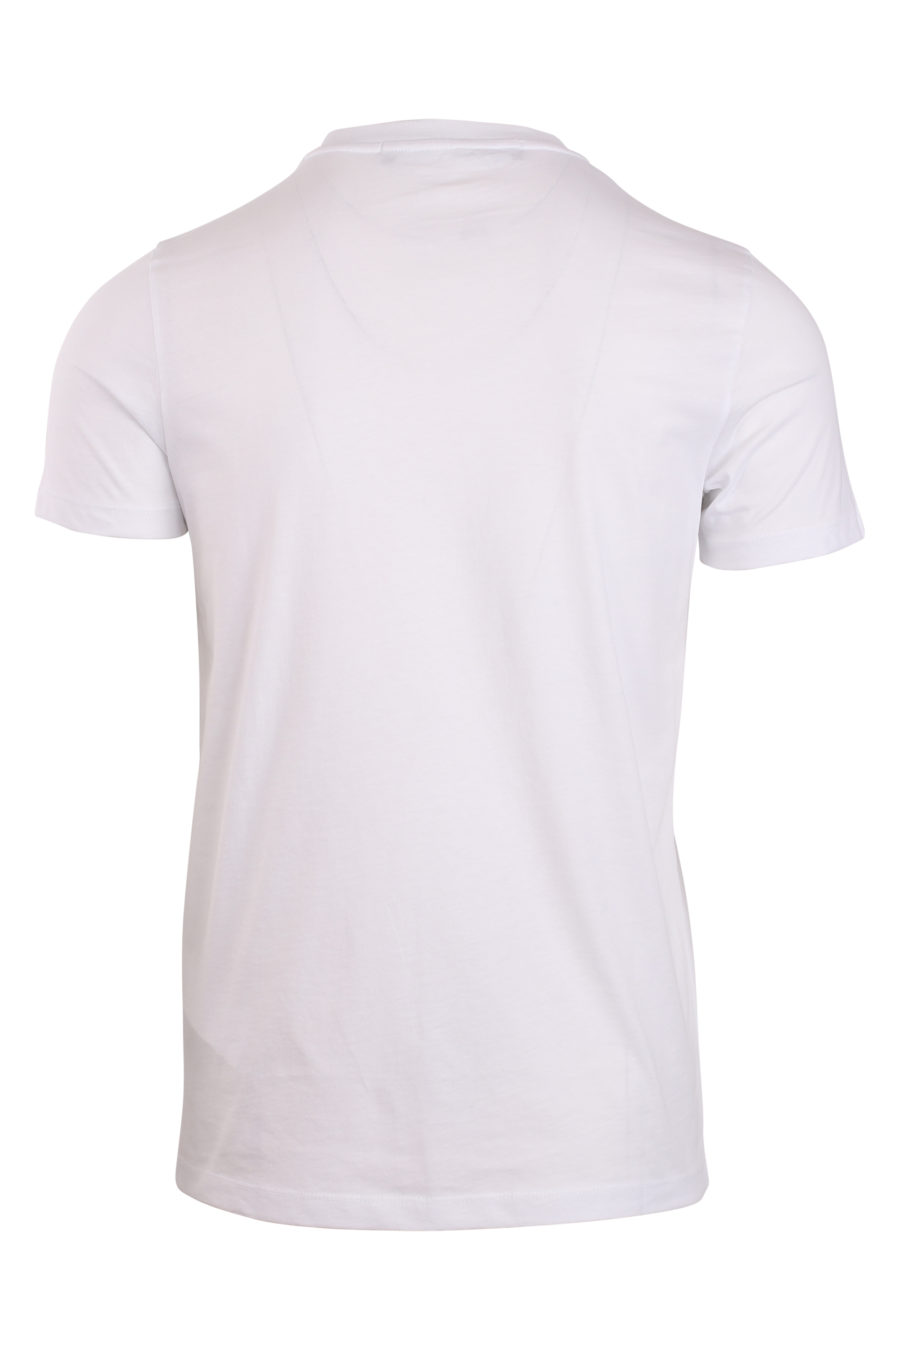 Camiseta blanca con logo amarillo 3D - IMG 0869